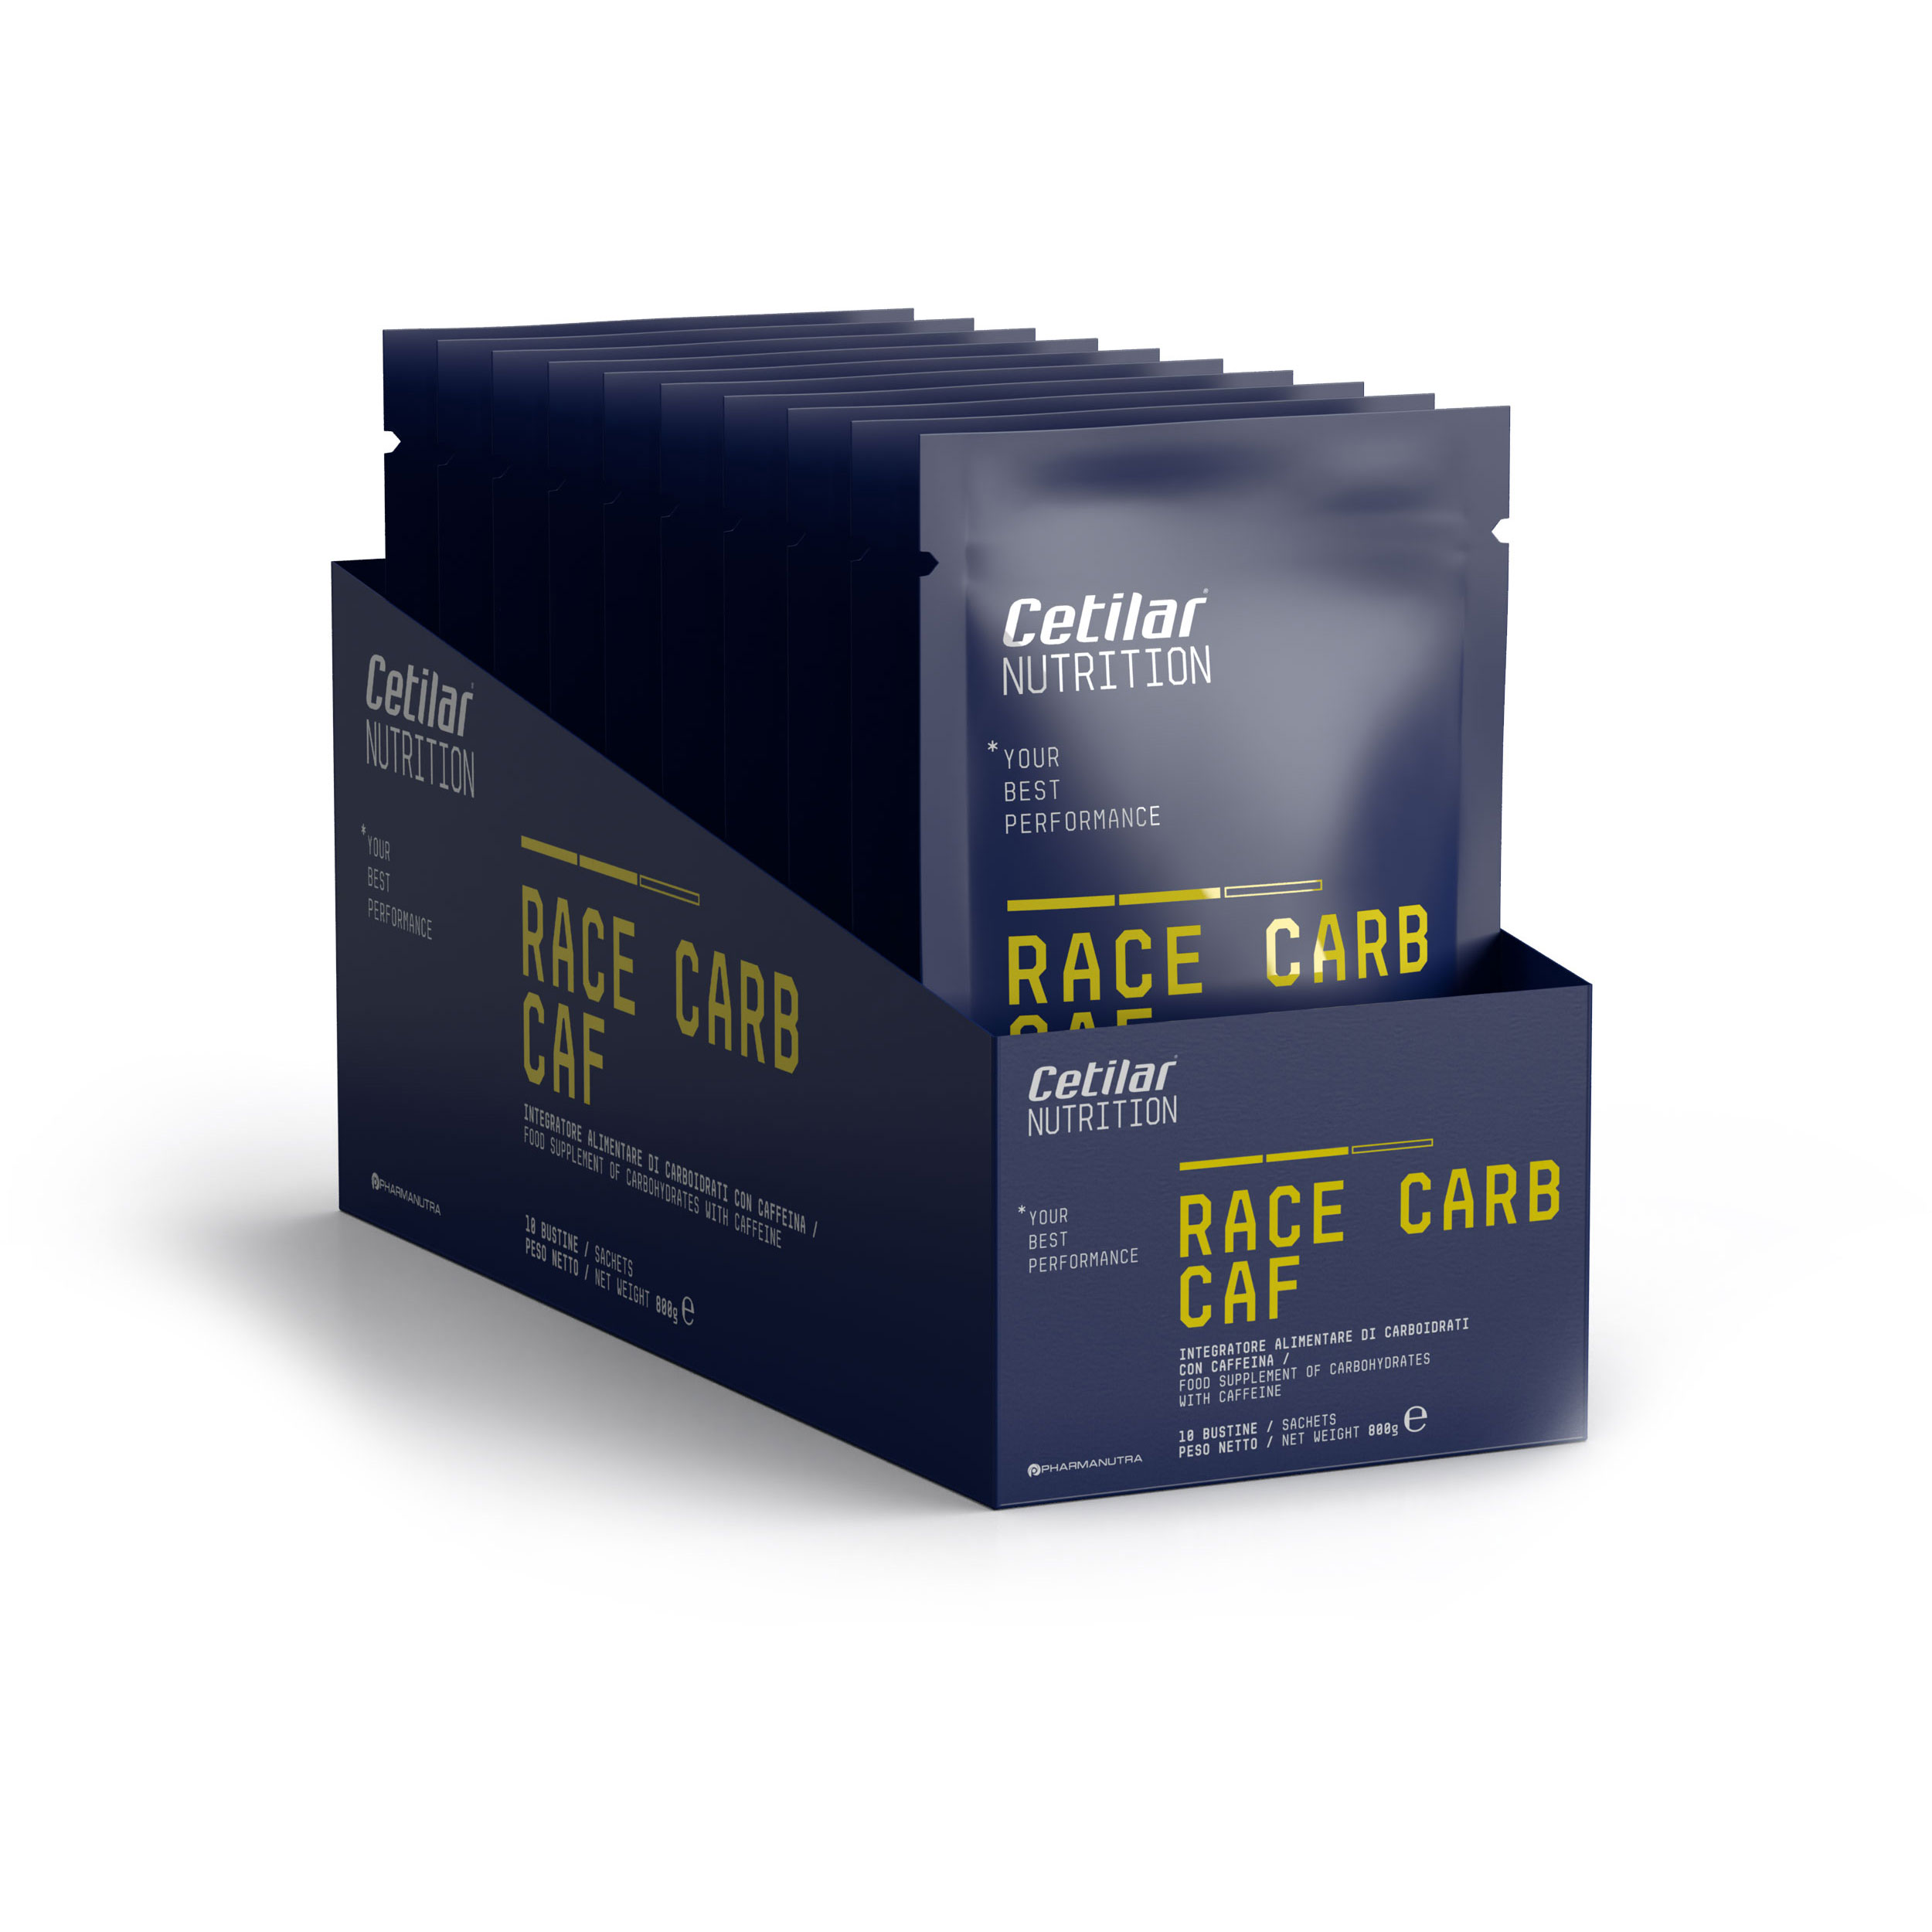 Race Carb Caf – Cetilar® Nutrition